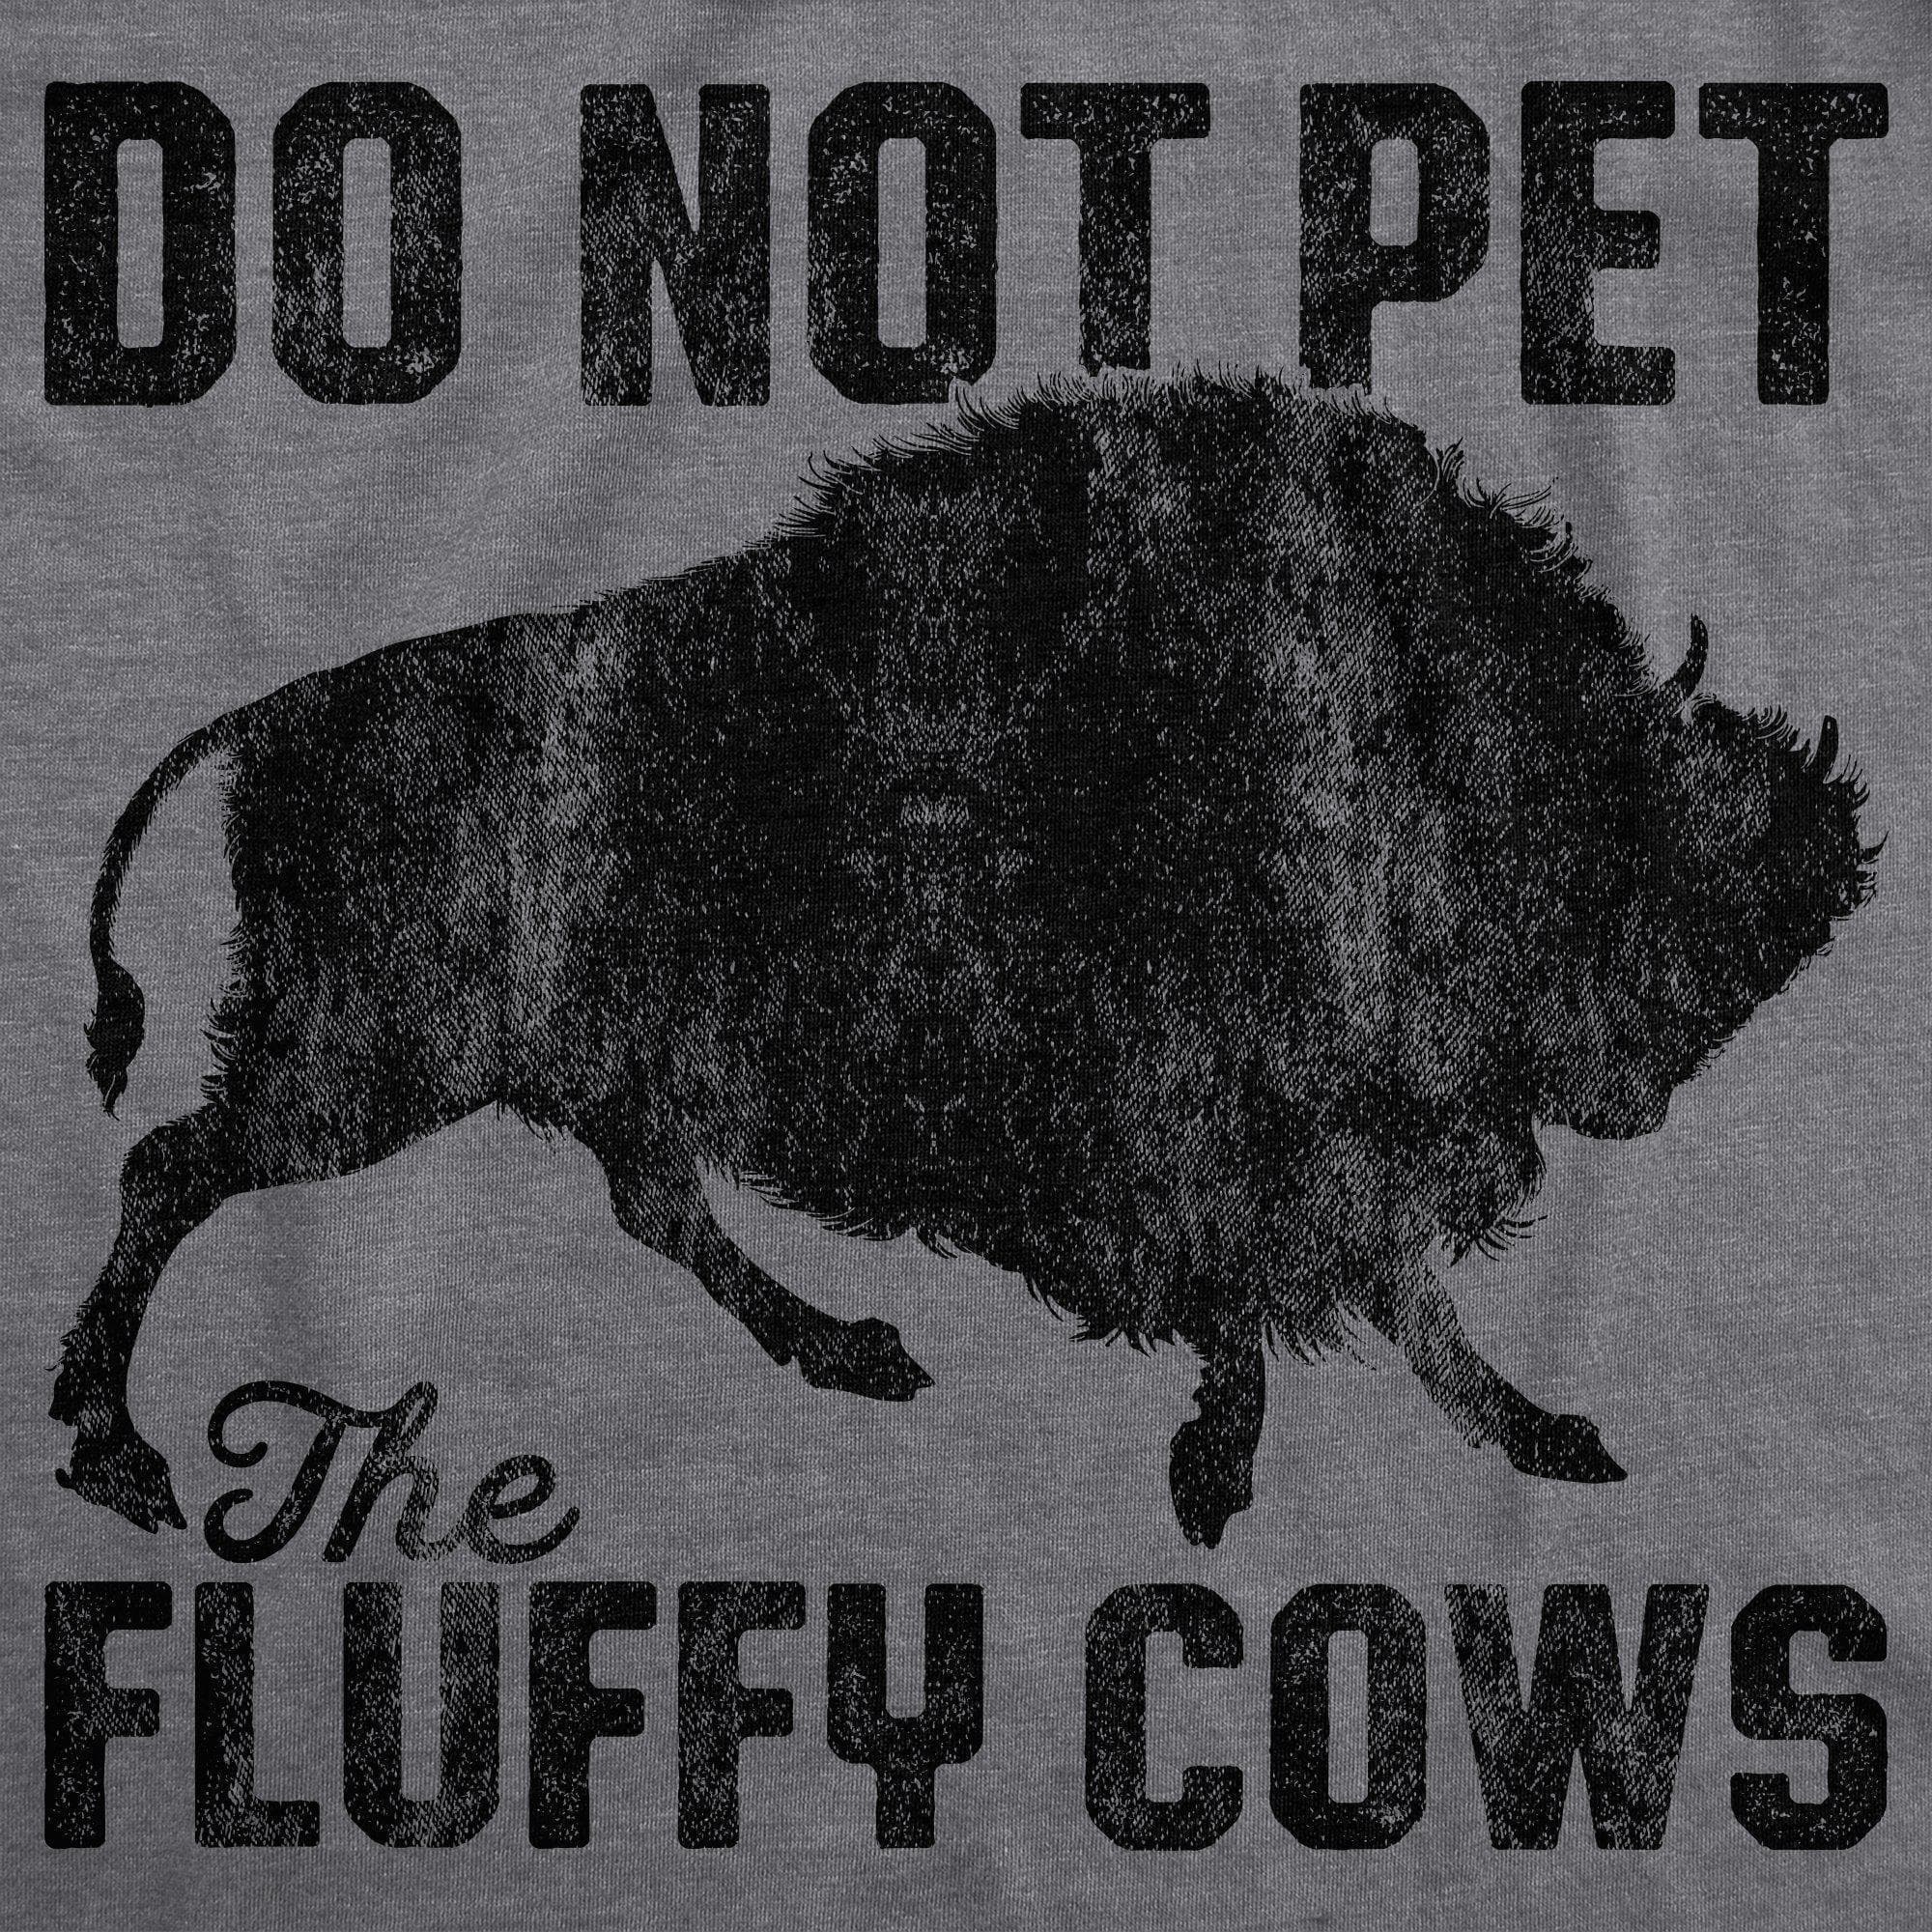 Do Not Pet The Fluffy Cows Women's Tshirt - Crazy Dog T-Shirts